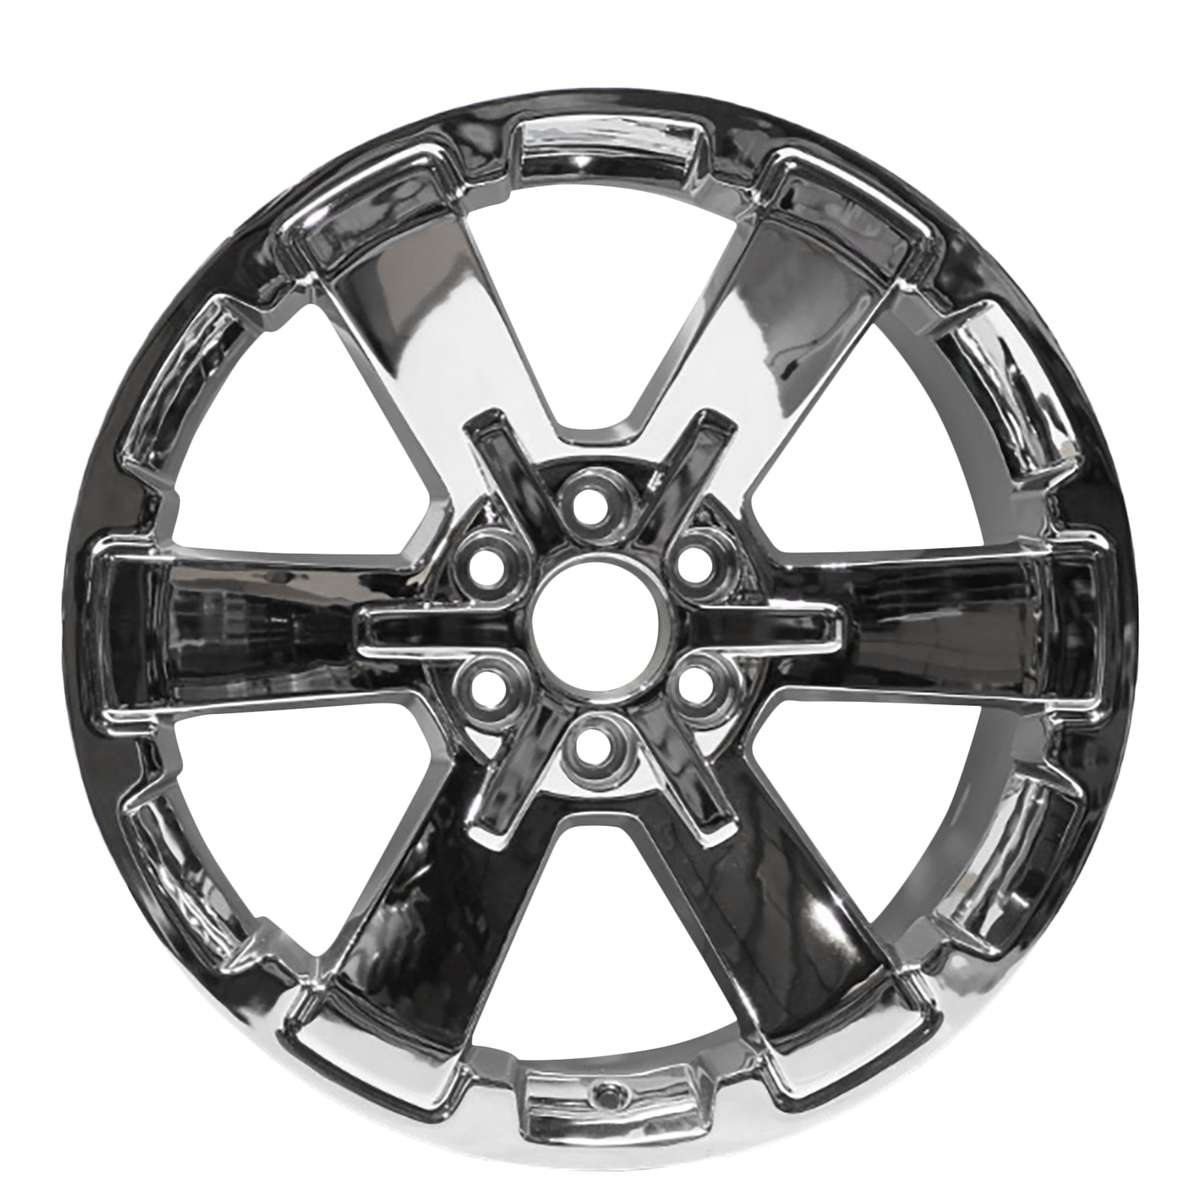 2014 Chevrolet Silverado 1500 New 22" Replacement Wheel Rim RW5662CHR